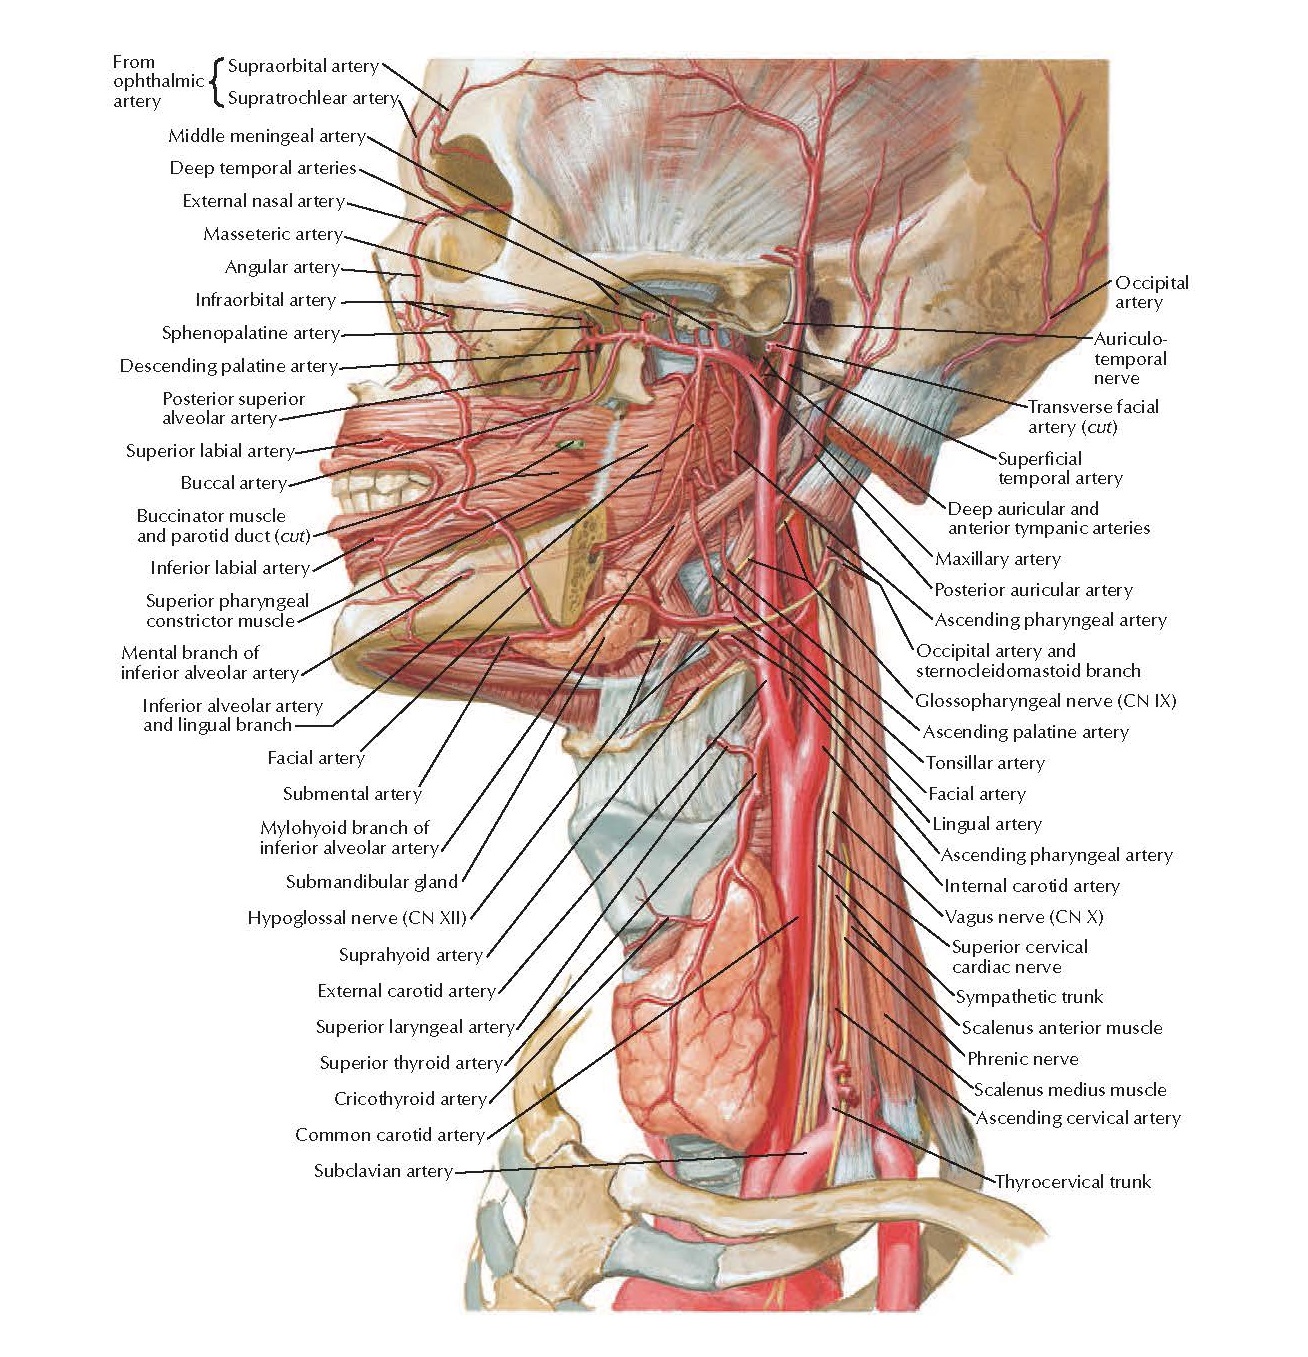 Arteries of Oral and Pharyngeal Regions Anatomy